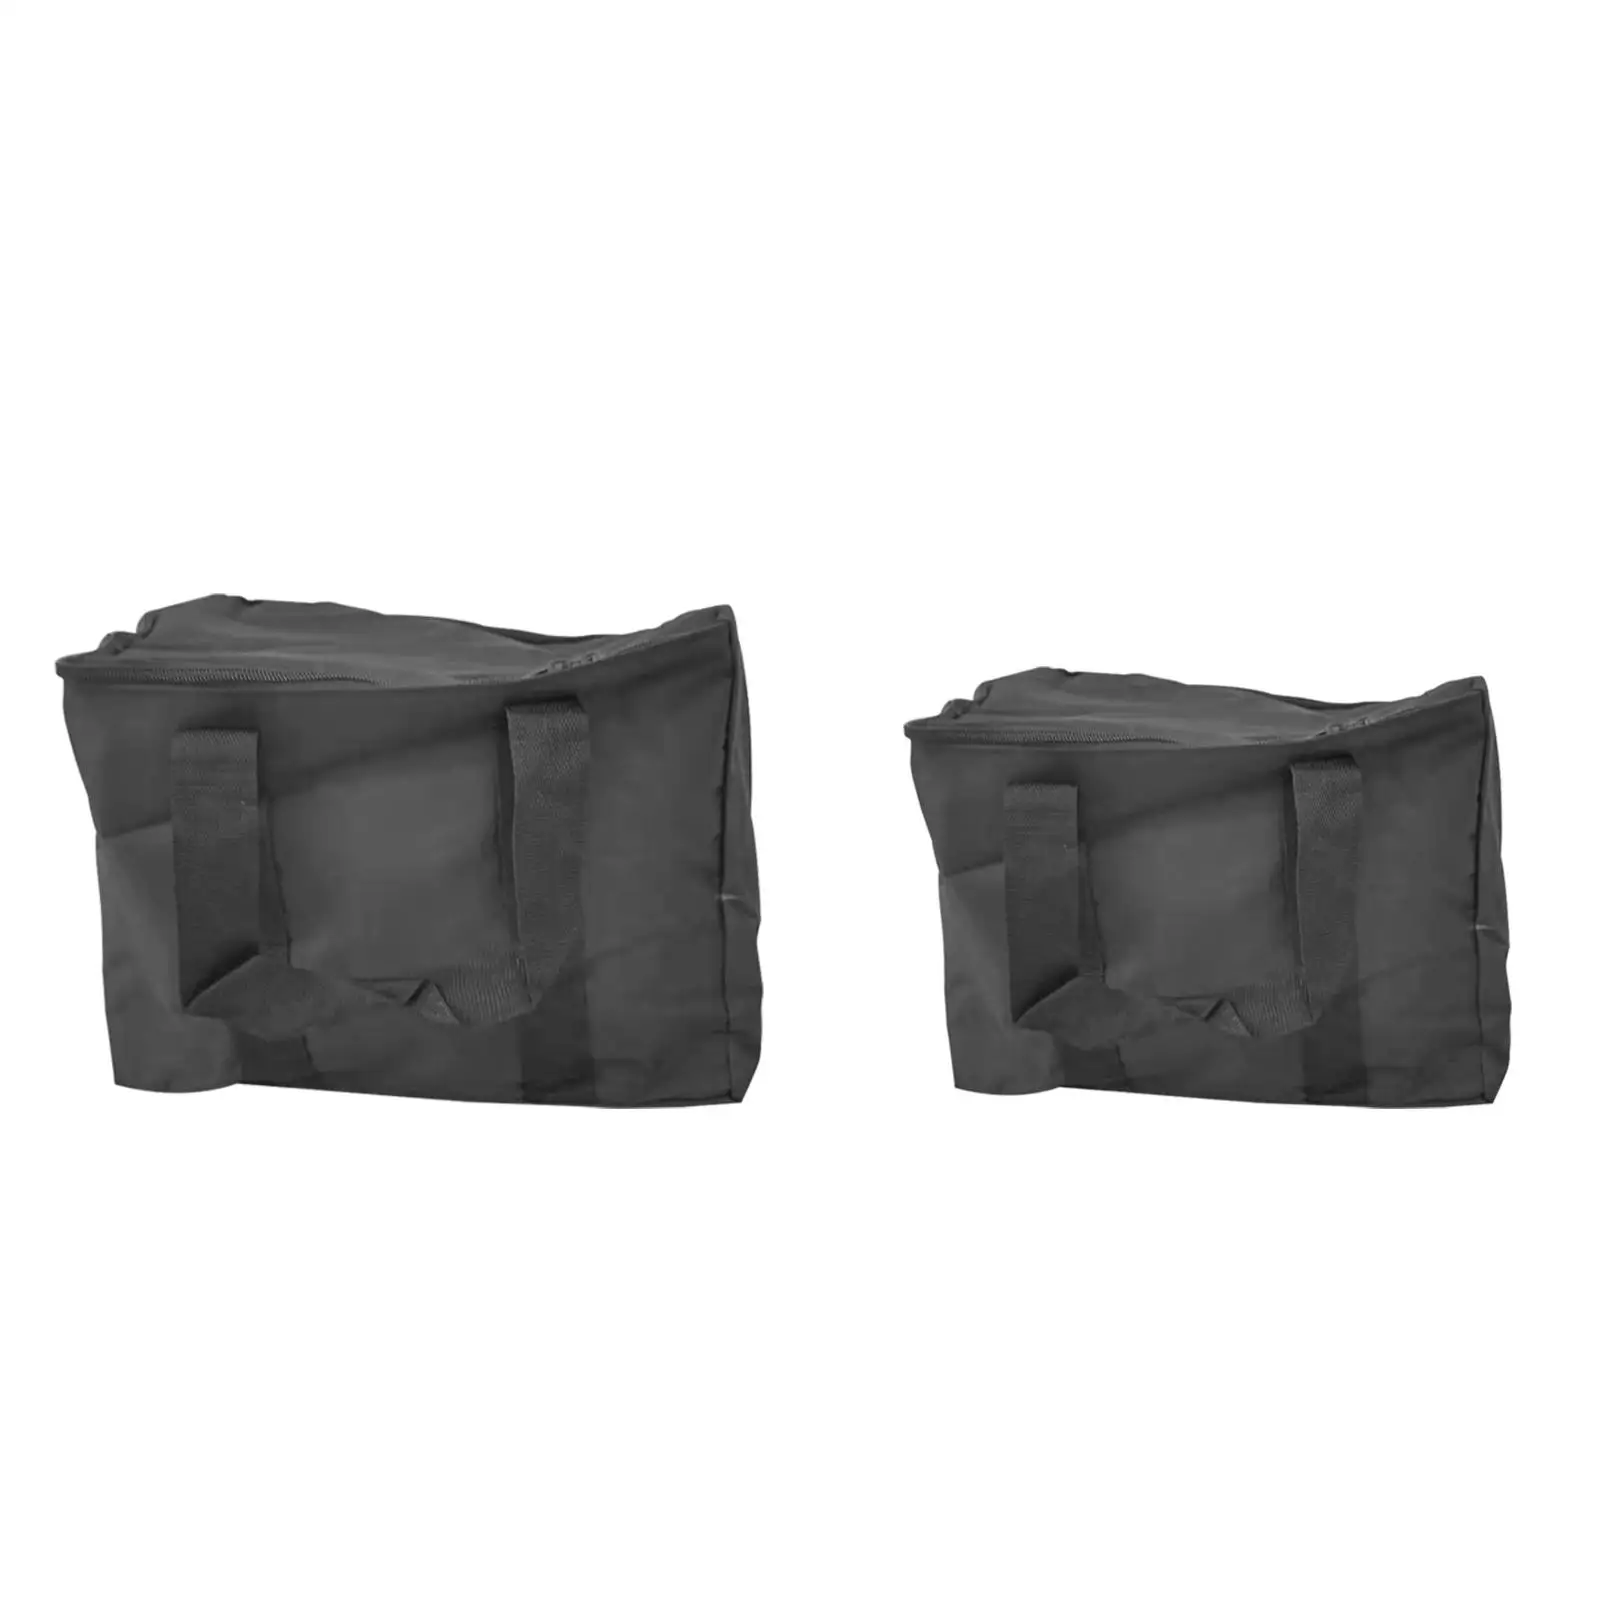 Multi Purpose Camp Stove Burner Carry Case Container Waterproof Picnic Bag